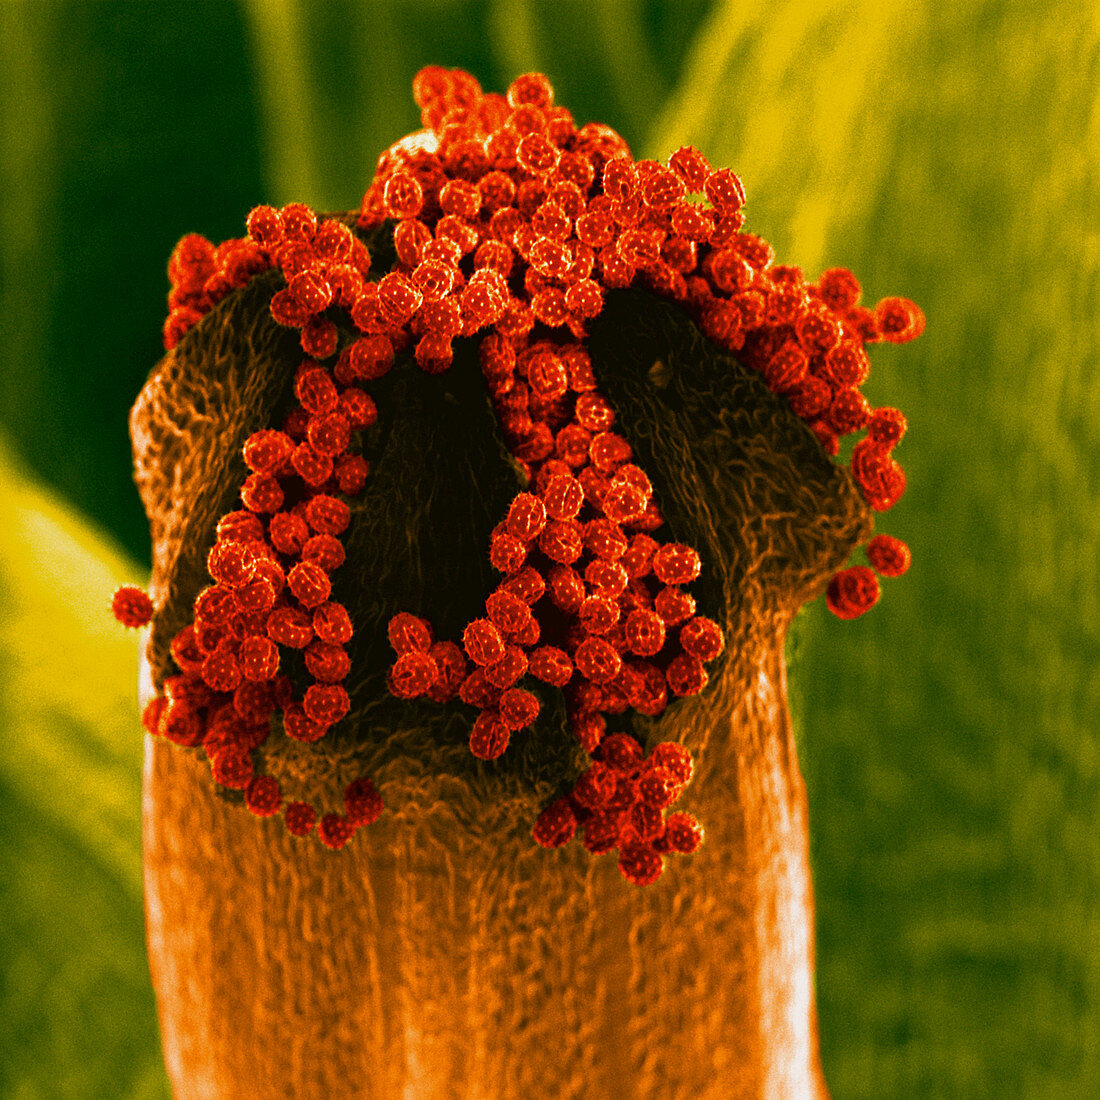 Coltsfoot pollen grains on stigma